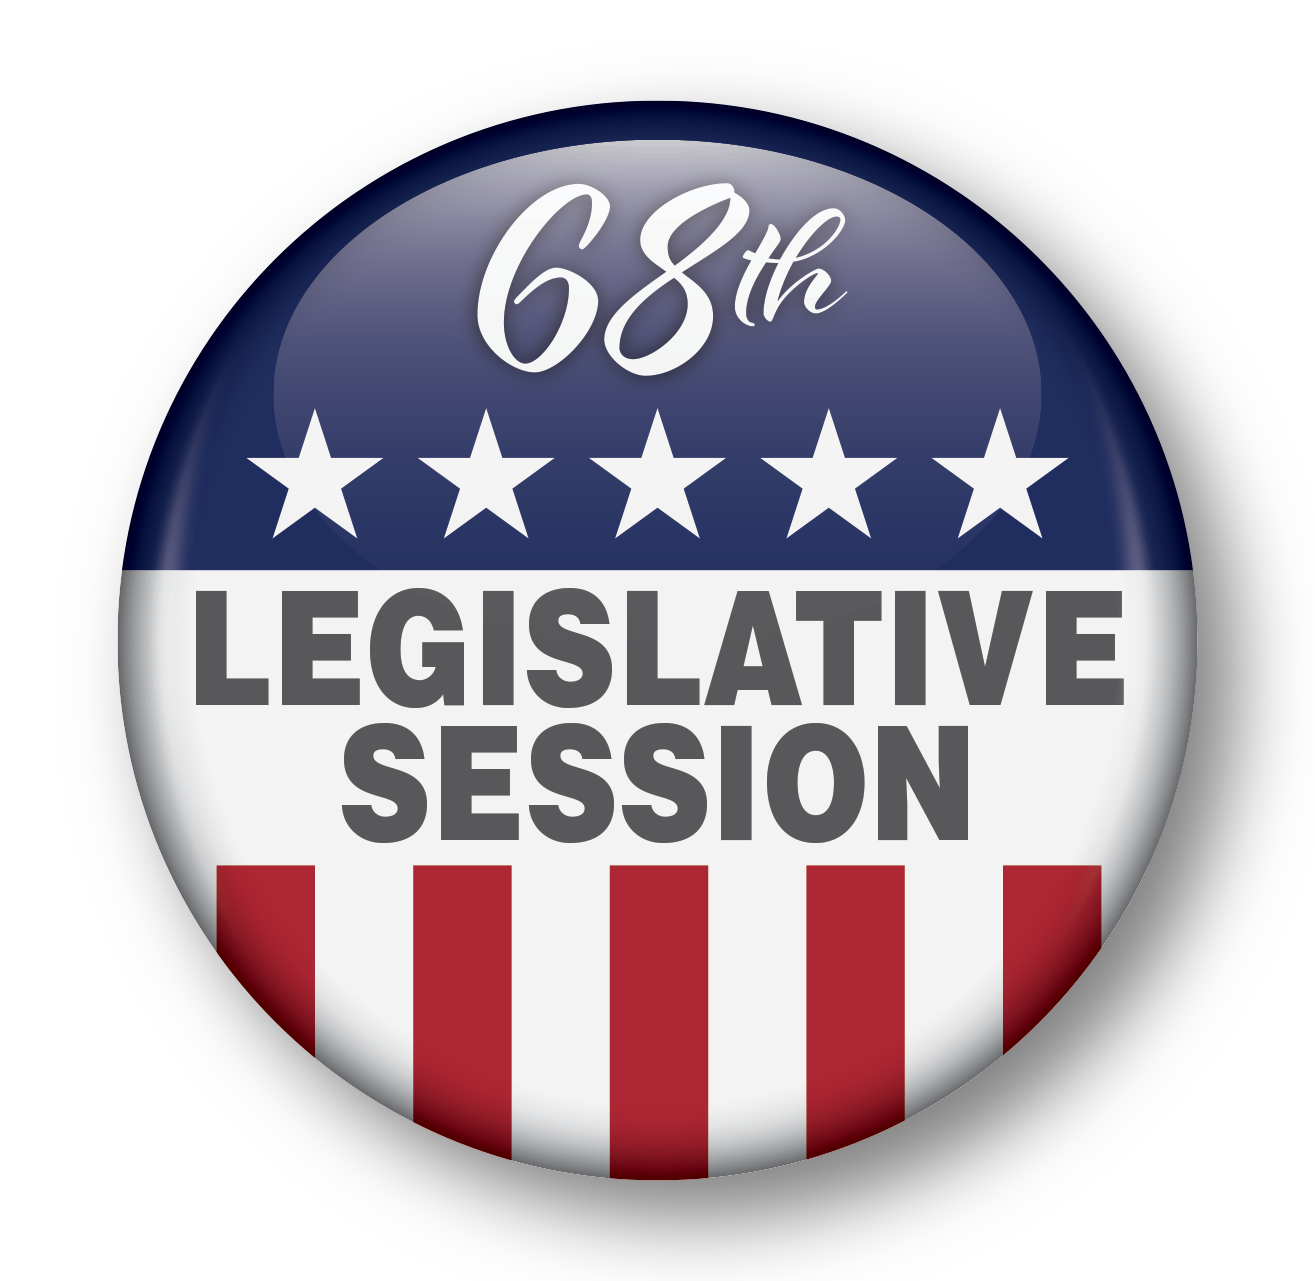 68th Legislative Session: Week One